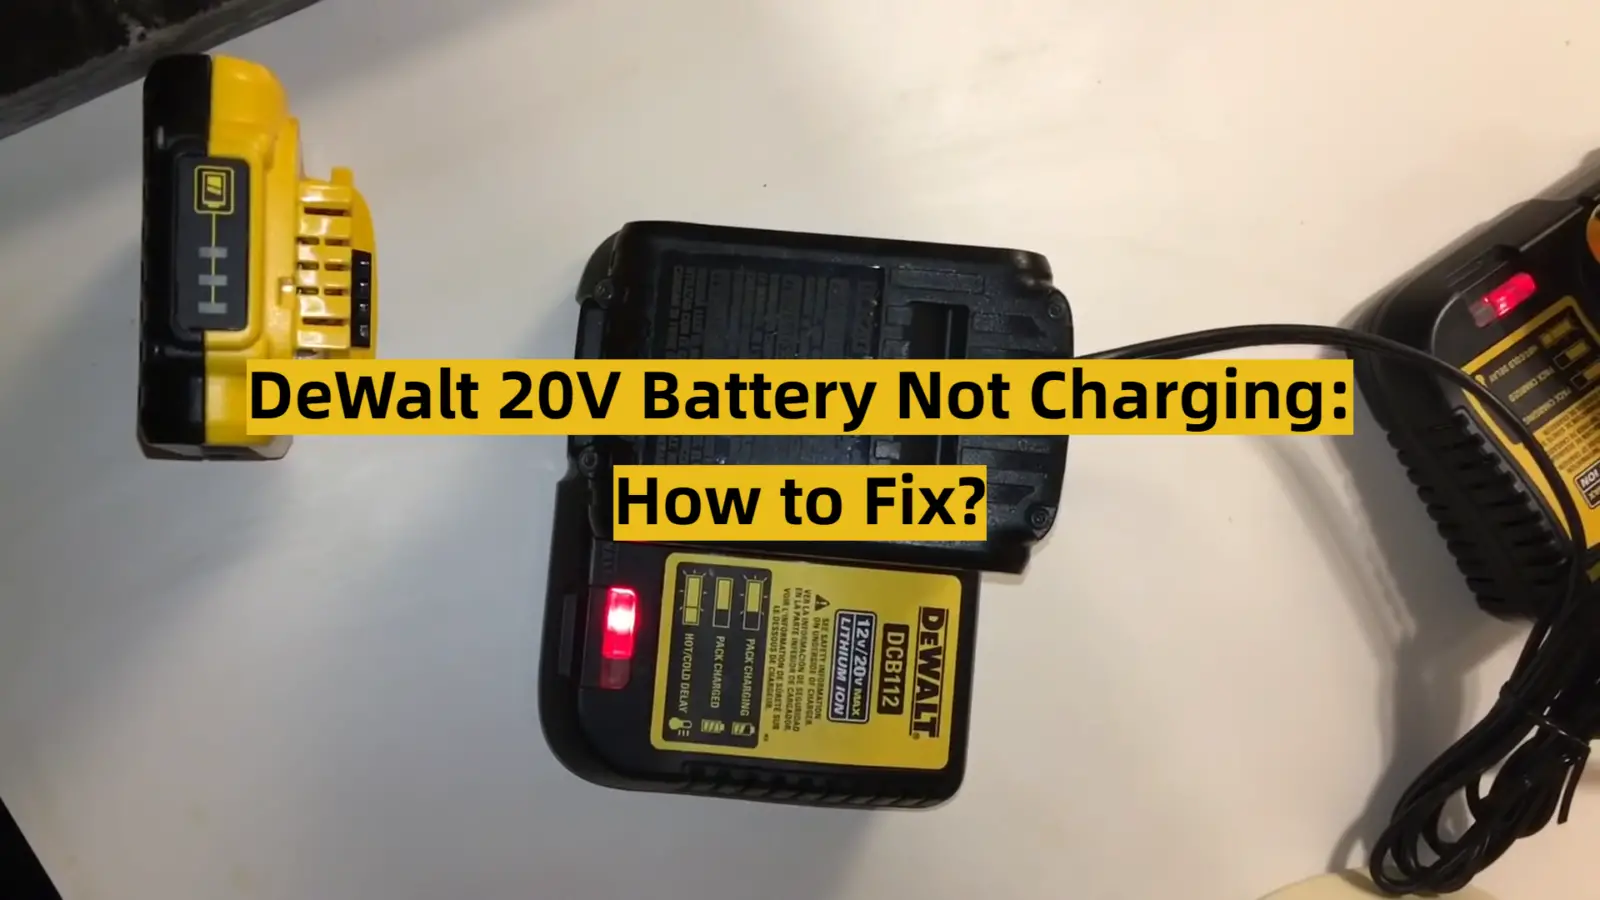 DeWalt 20V Battery Not Charging: How to Fix?